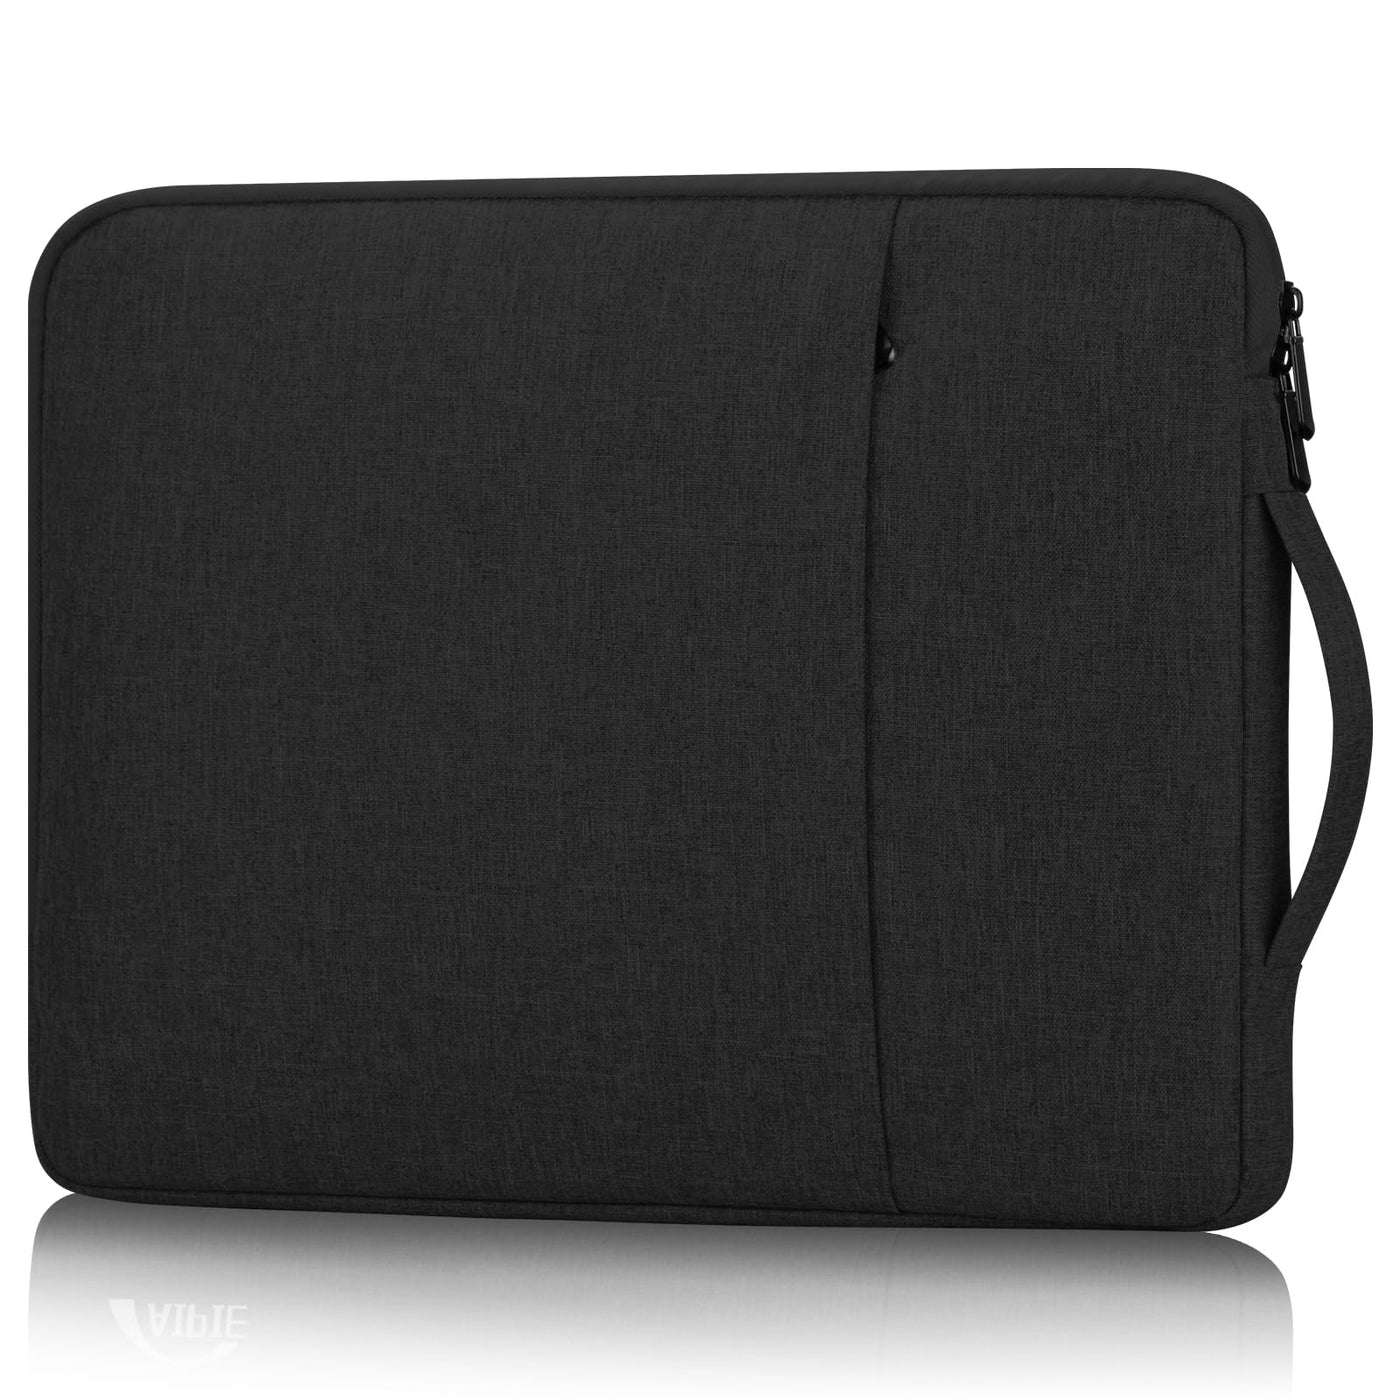 Laptop Bag Sleeve Handbag Compatible MacBook, Acer, Asus, Dell, Lenovo, HP Notebook Laptop Sleeve Desigual iPad Protective Cover